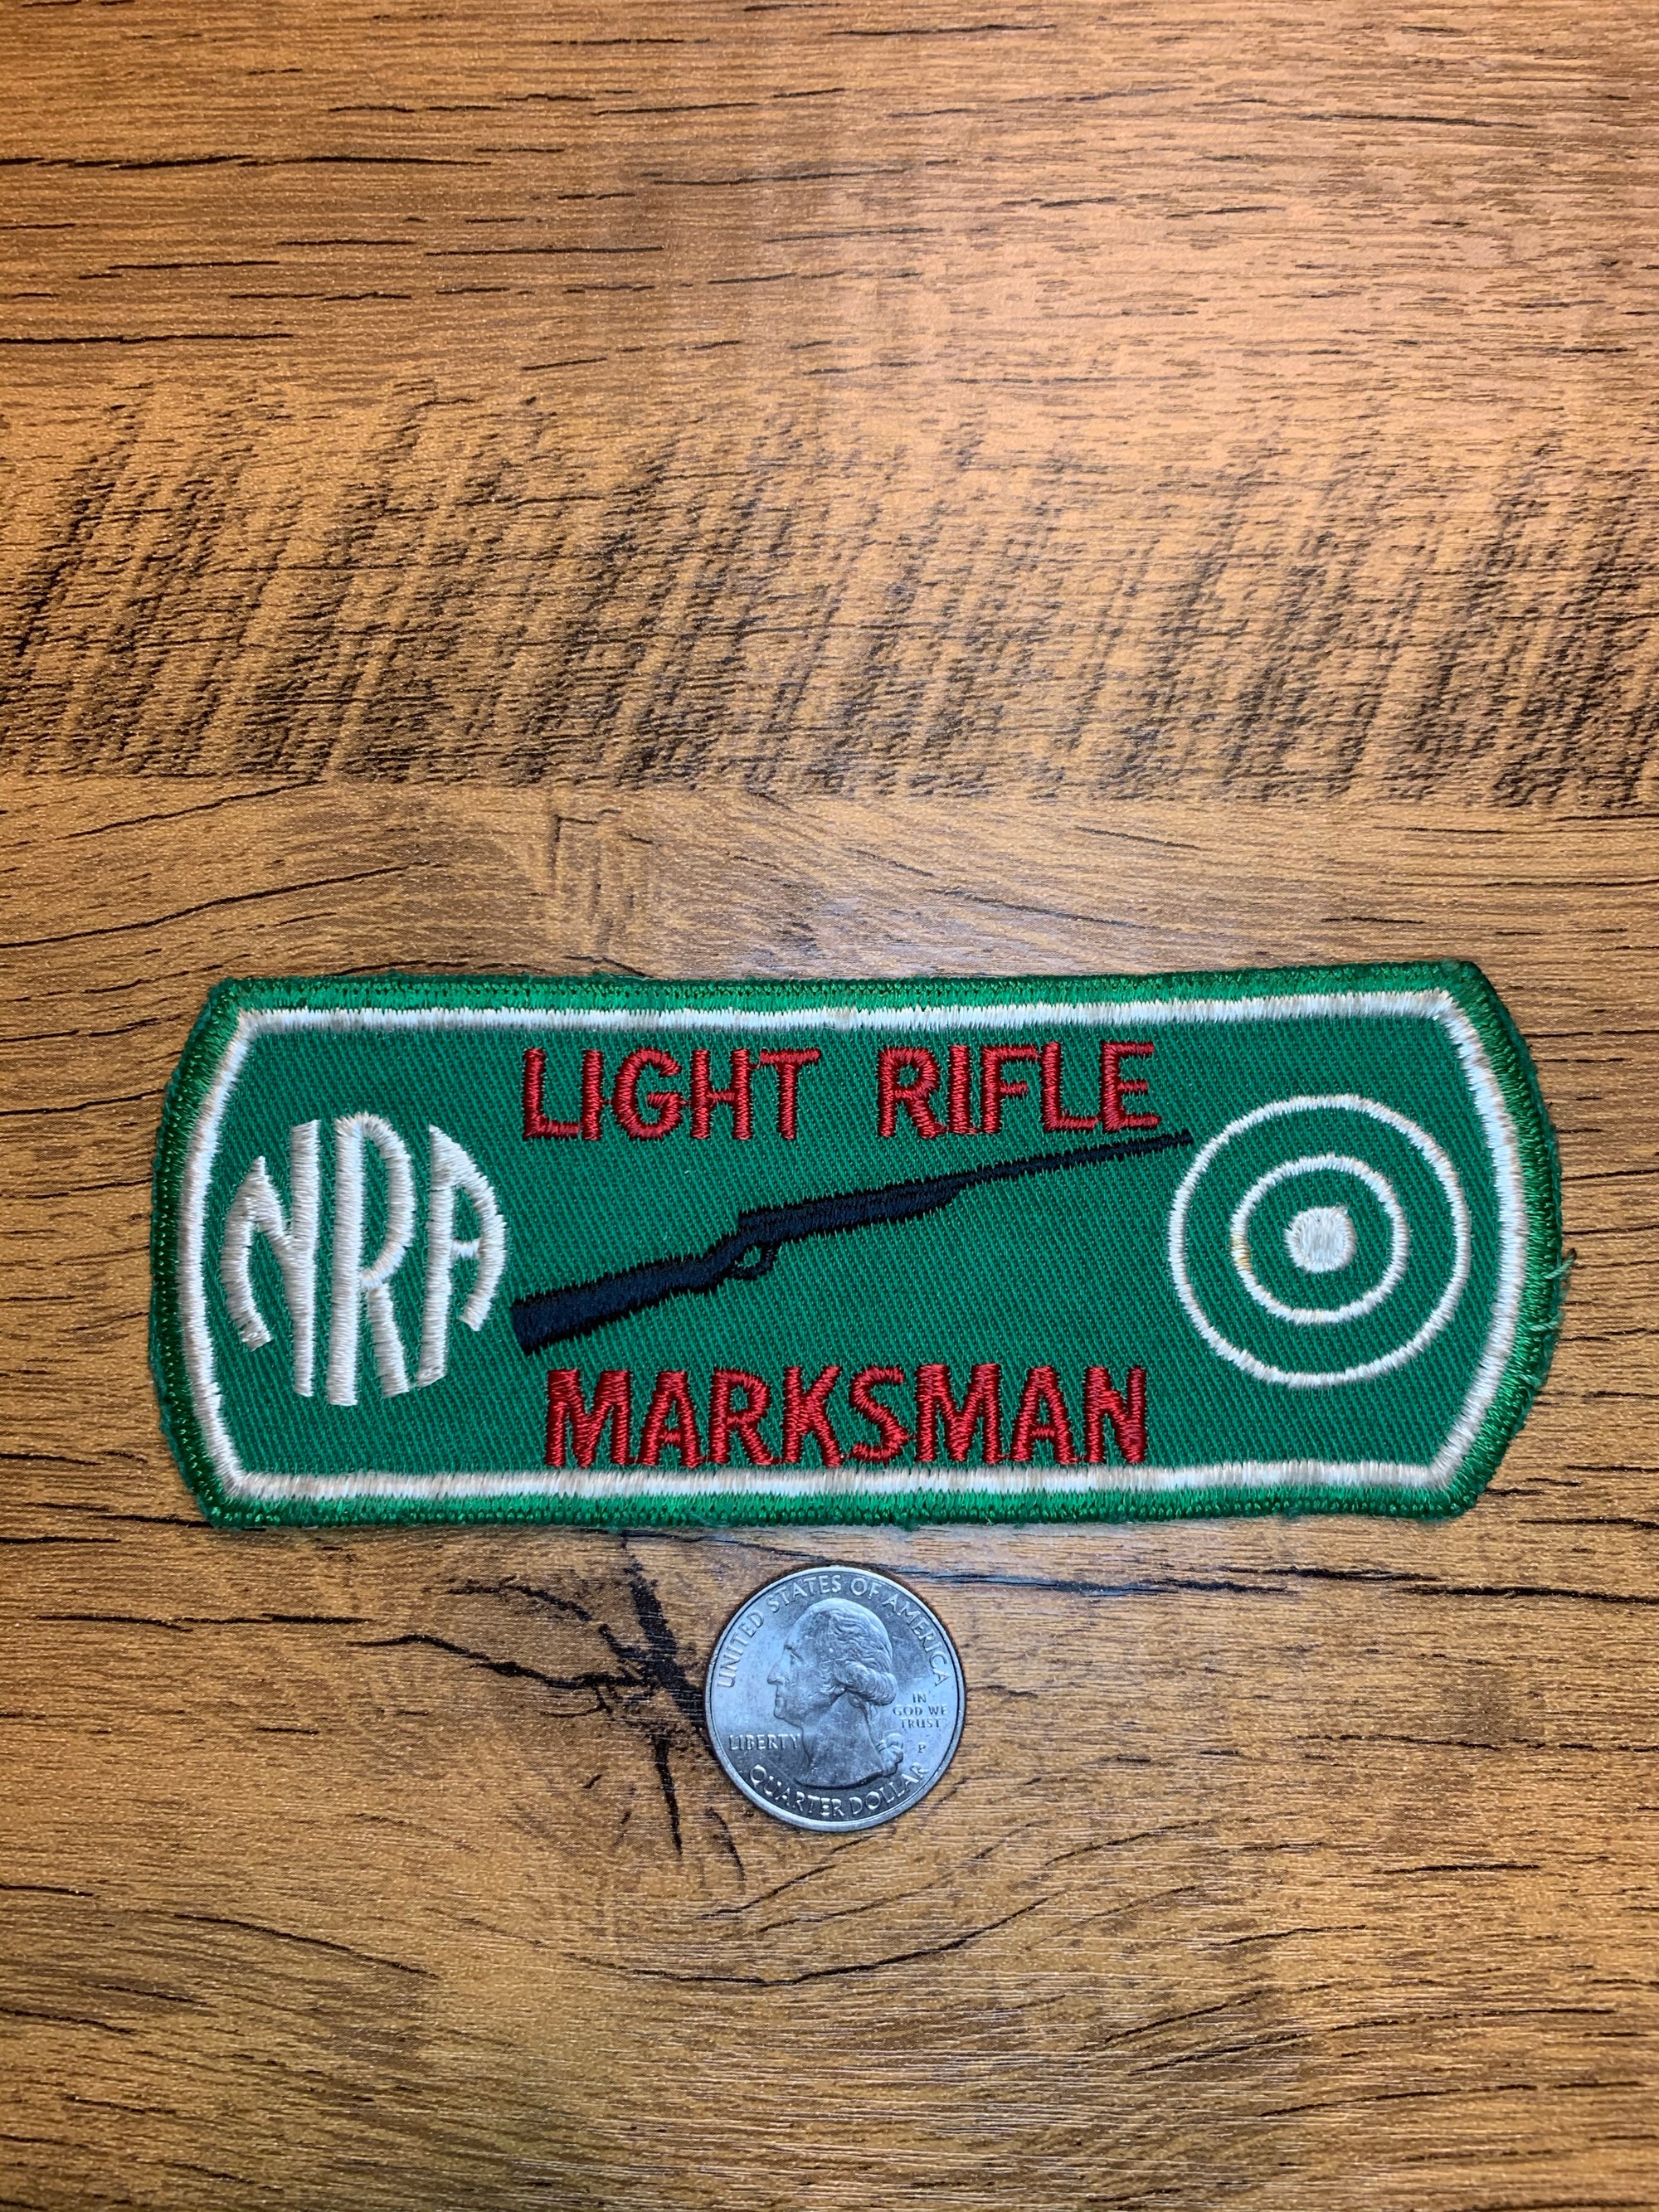 Vintage NRA Rifle Marksman